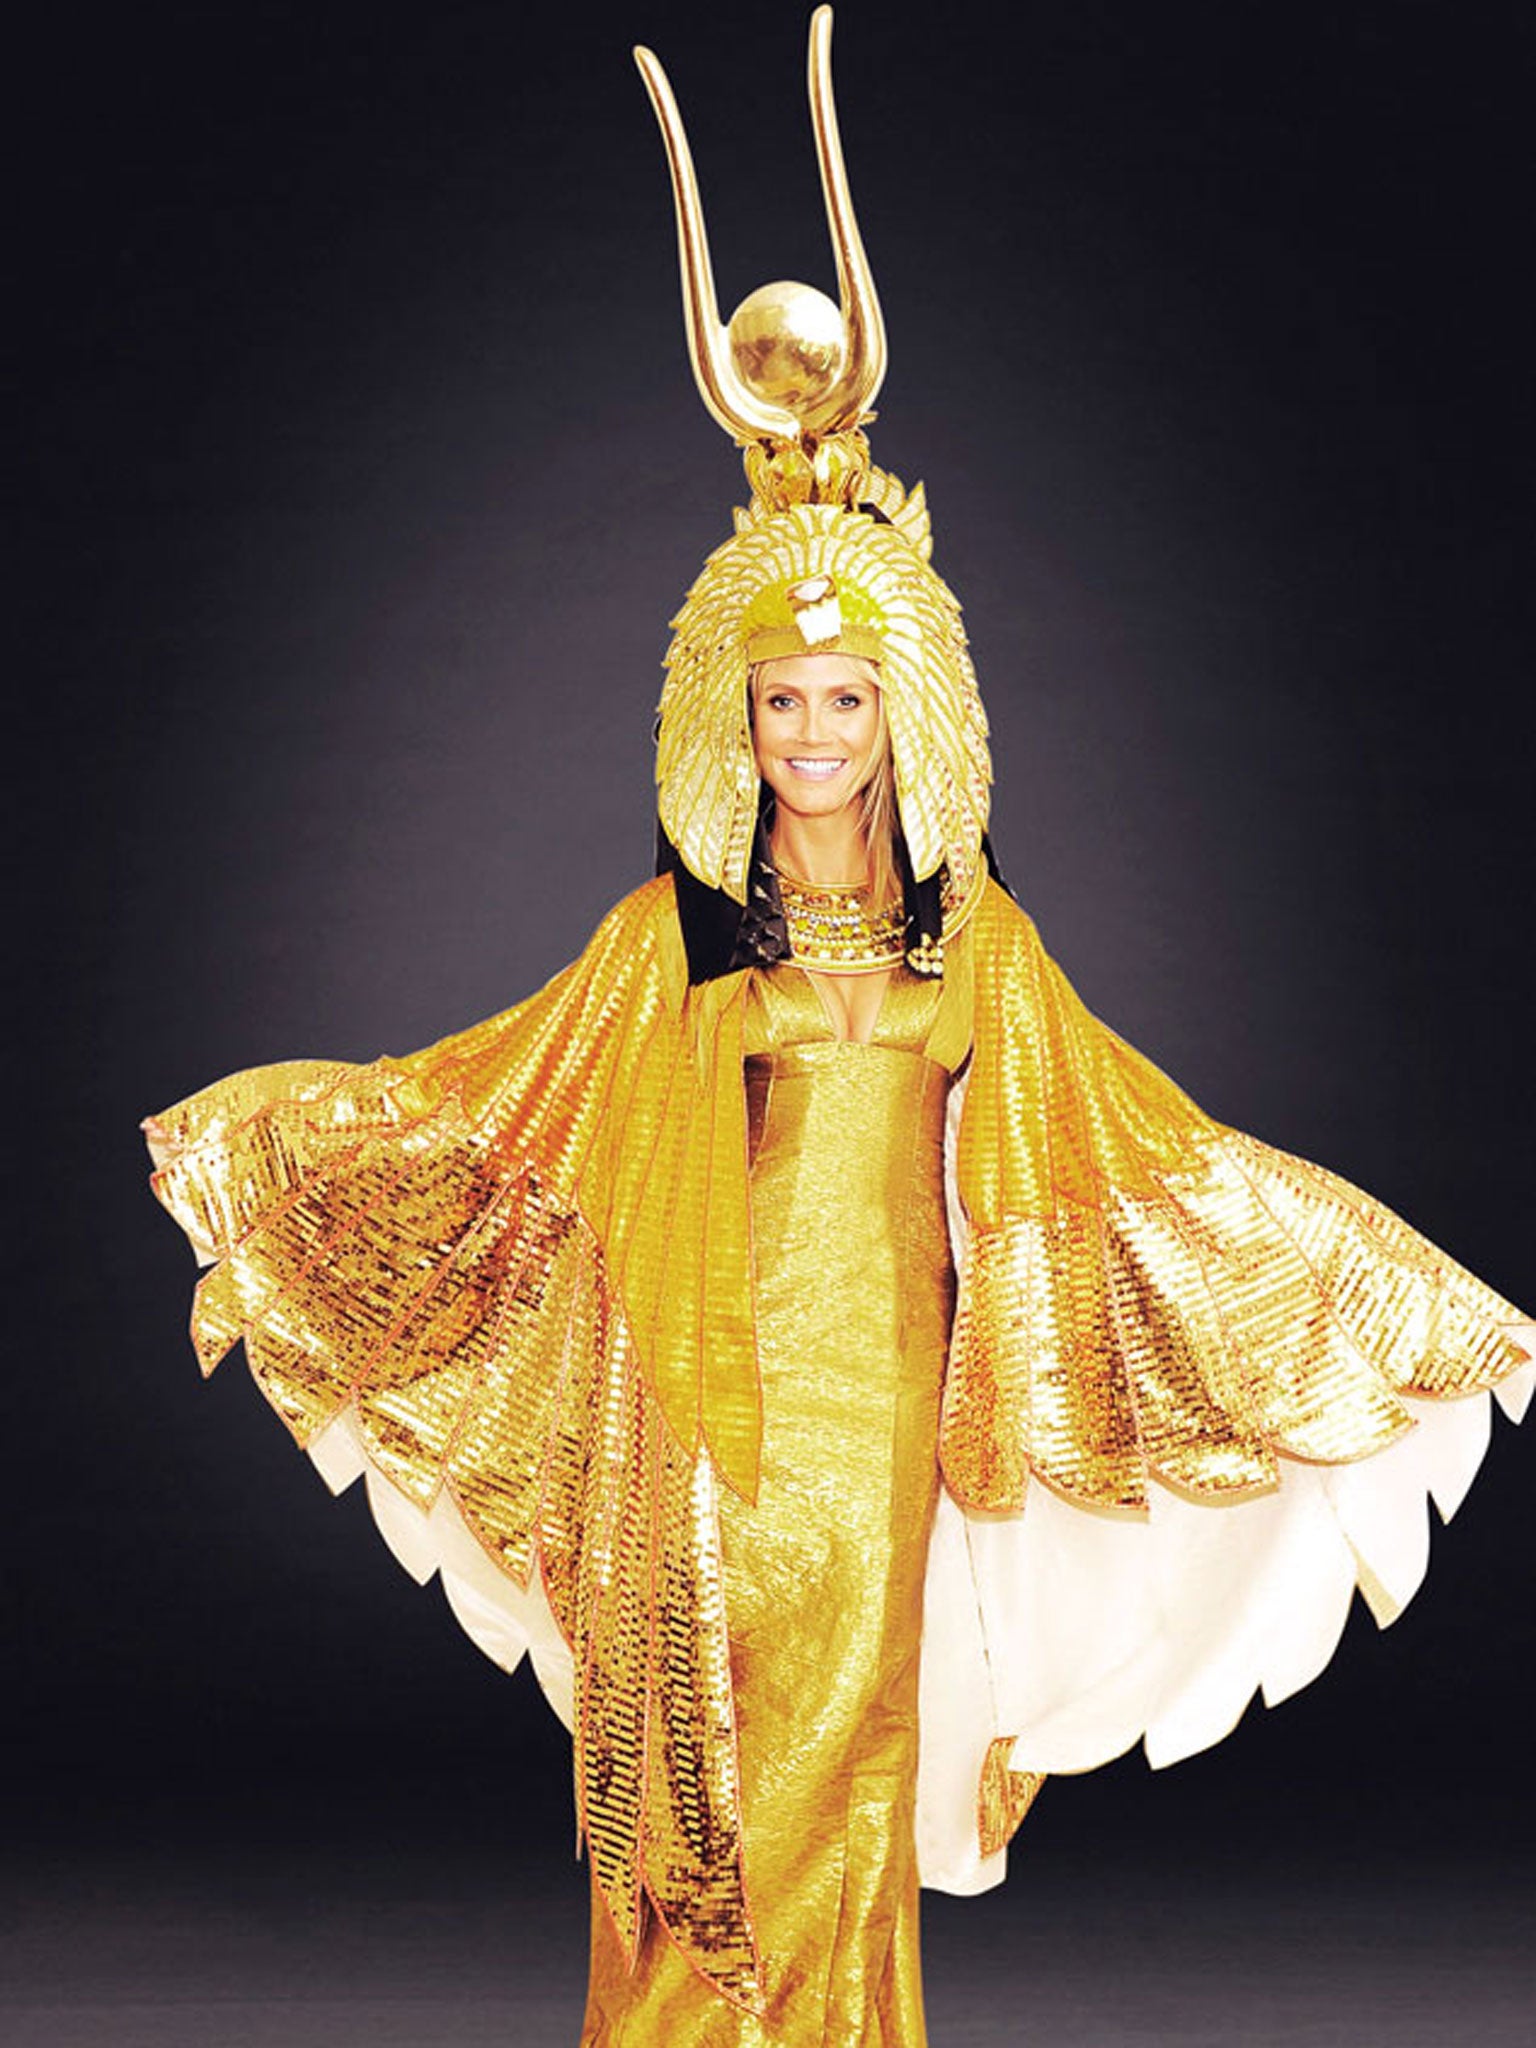 Heidi Klum dressed as the gold Cleopatra in 2012